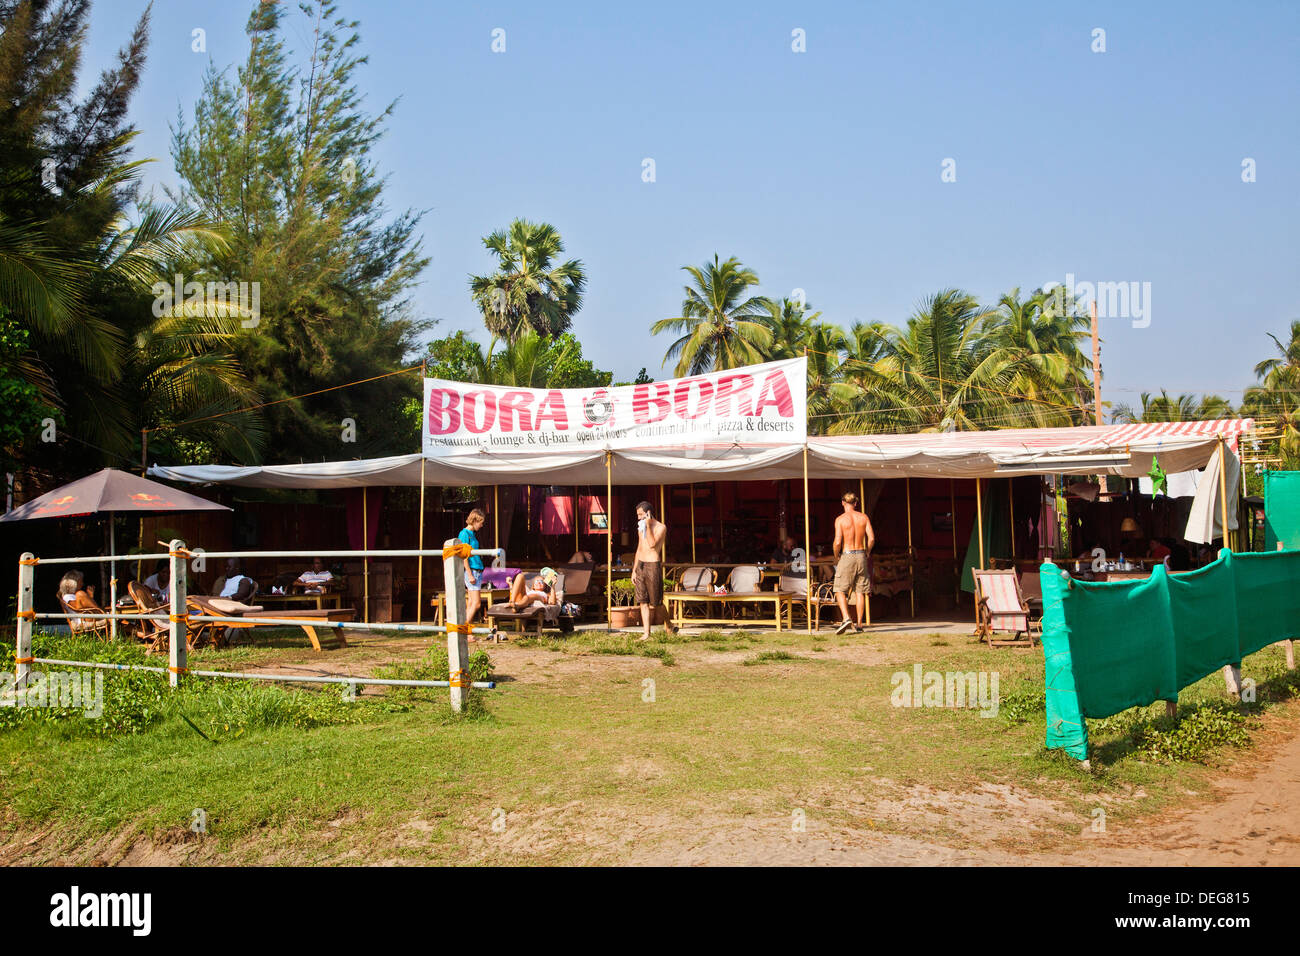 Bora Bora Restaurant, Vagator, Nord-Goa, Goa, Indien Stockfoto